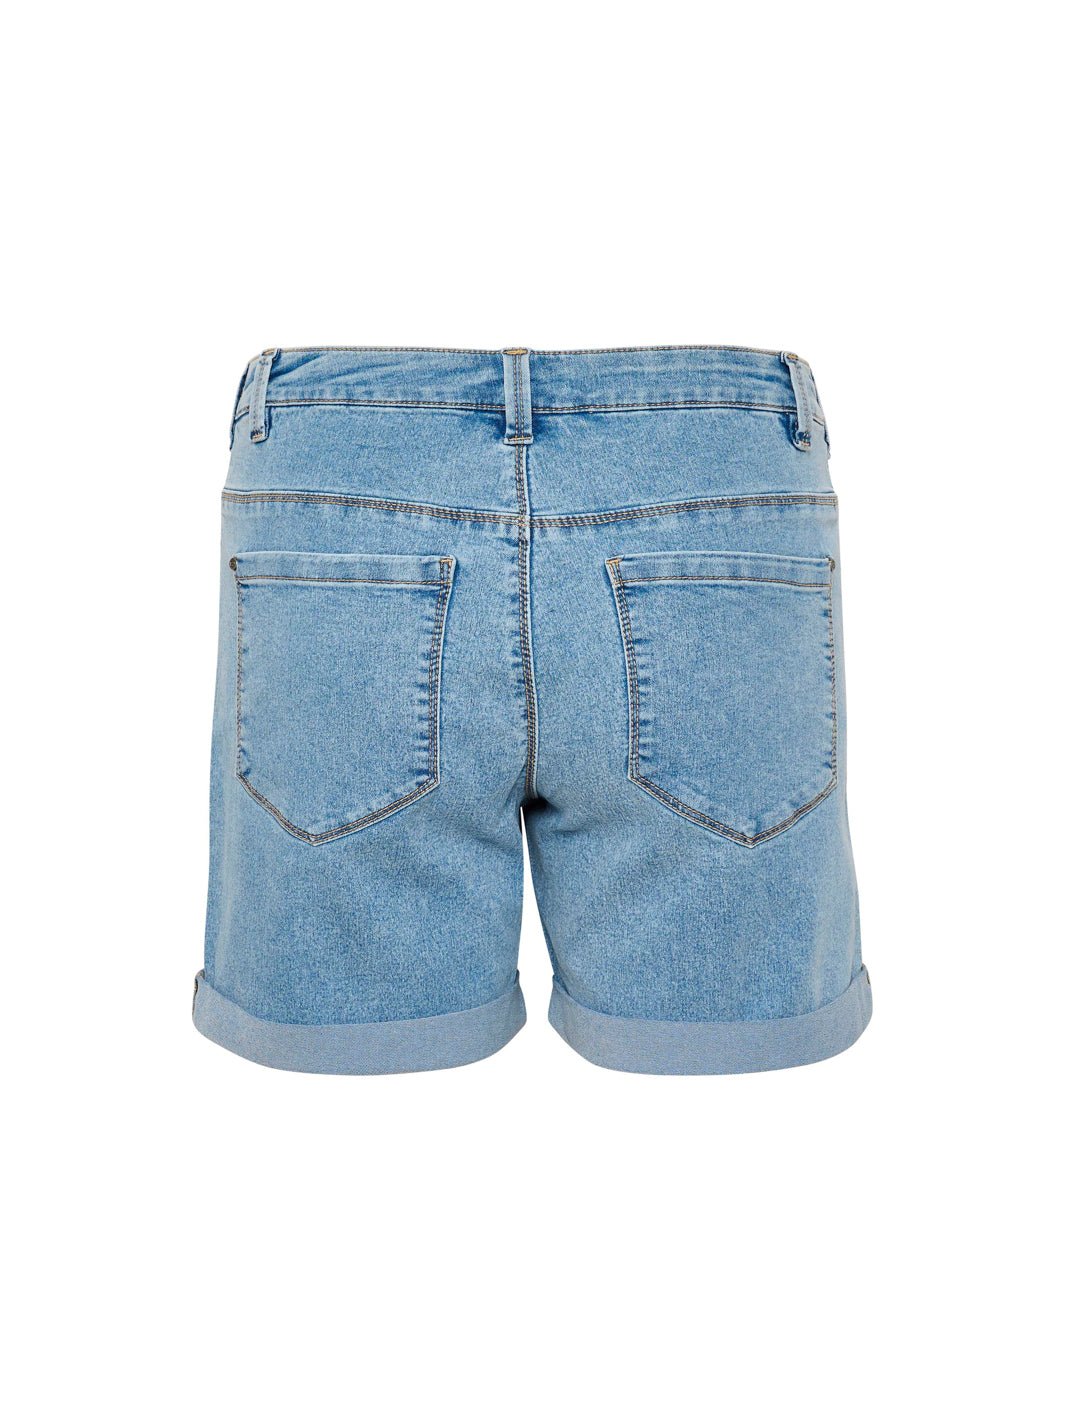 Kaffe KAvicky denim shorts light blue washed - Online-Mode